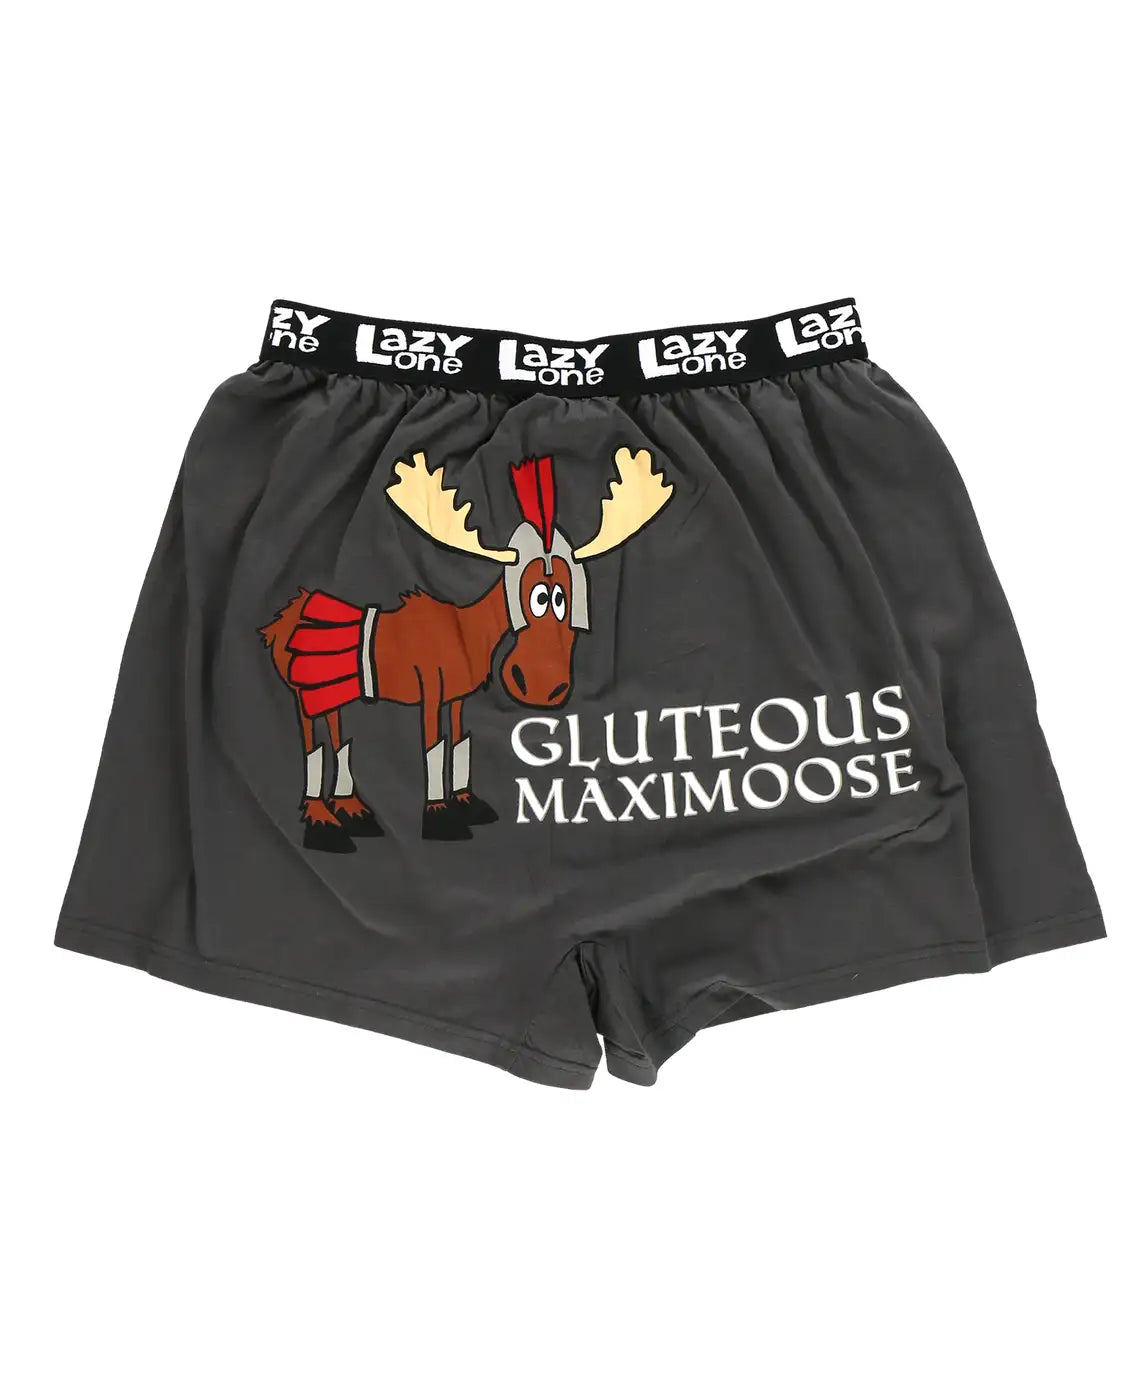 Gluteous Maximoose Men's Funny Boxer